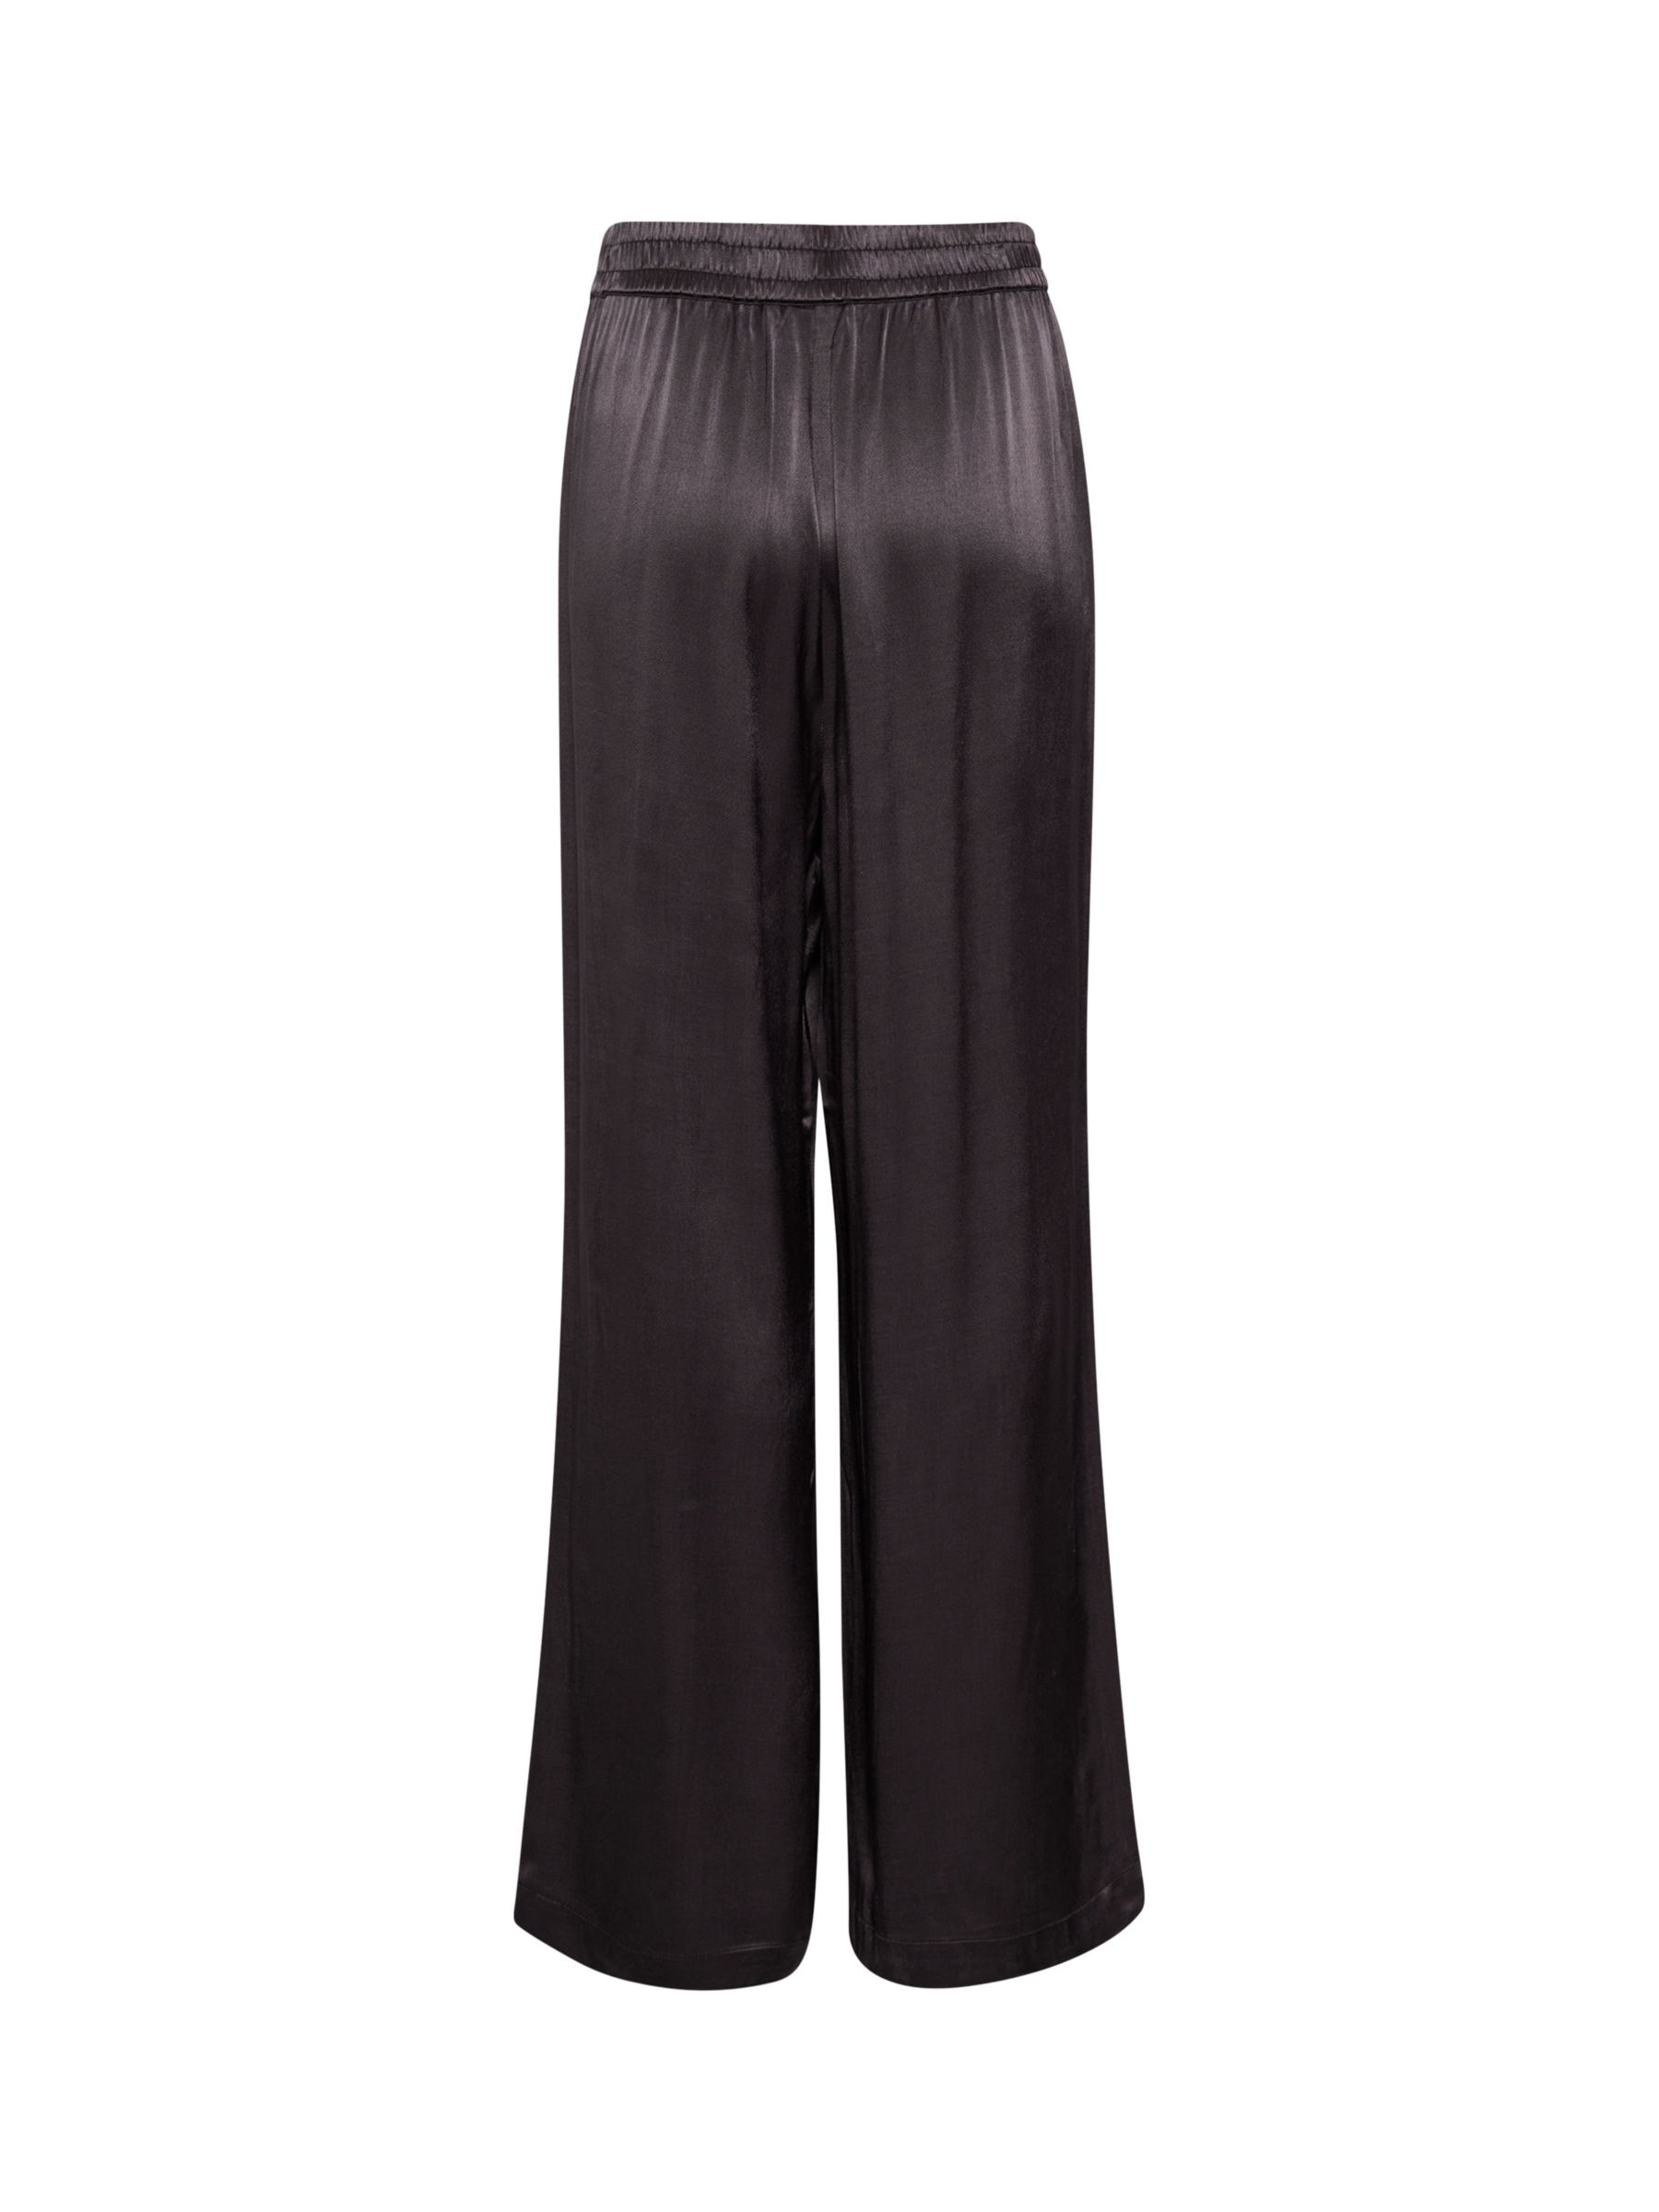 Buy KAFFE Rosita Wide Leg Elastic Waist Trousers, Brown Online at johnlewis.com